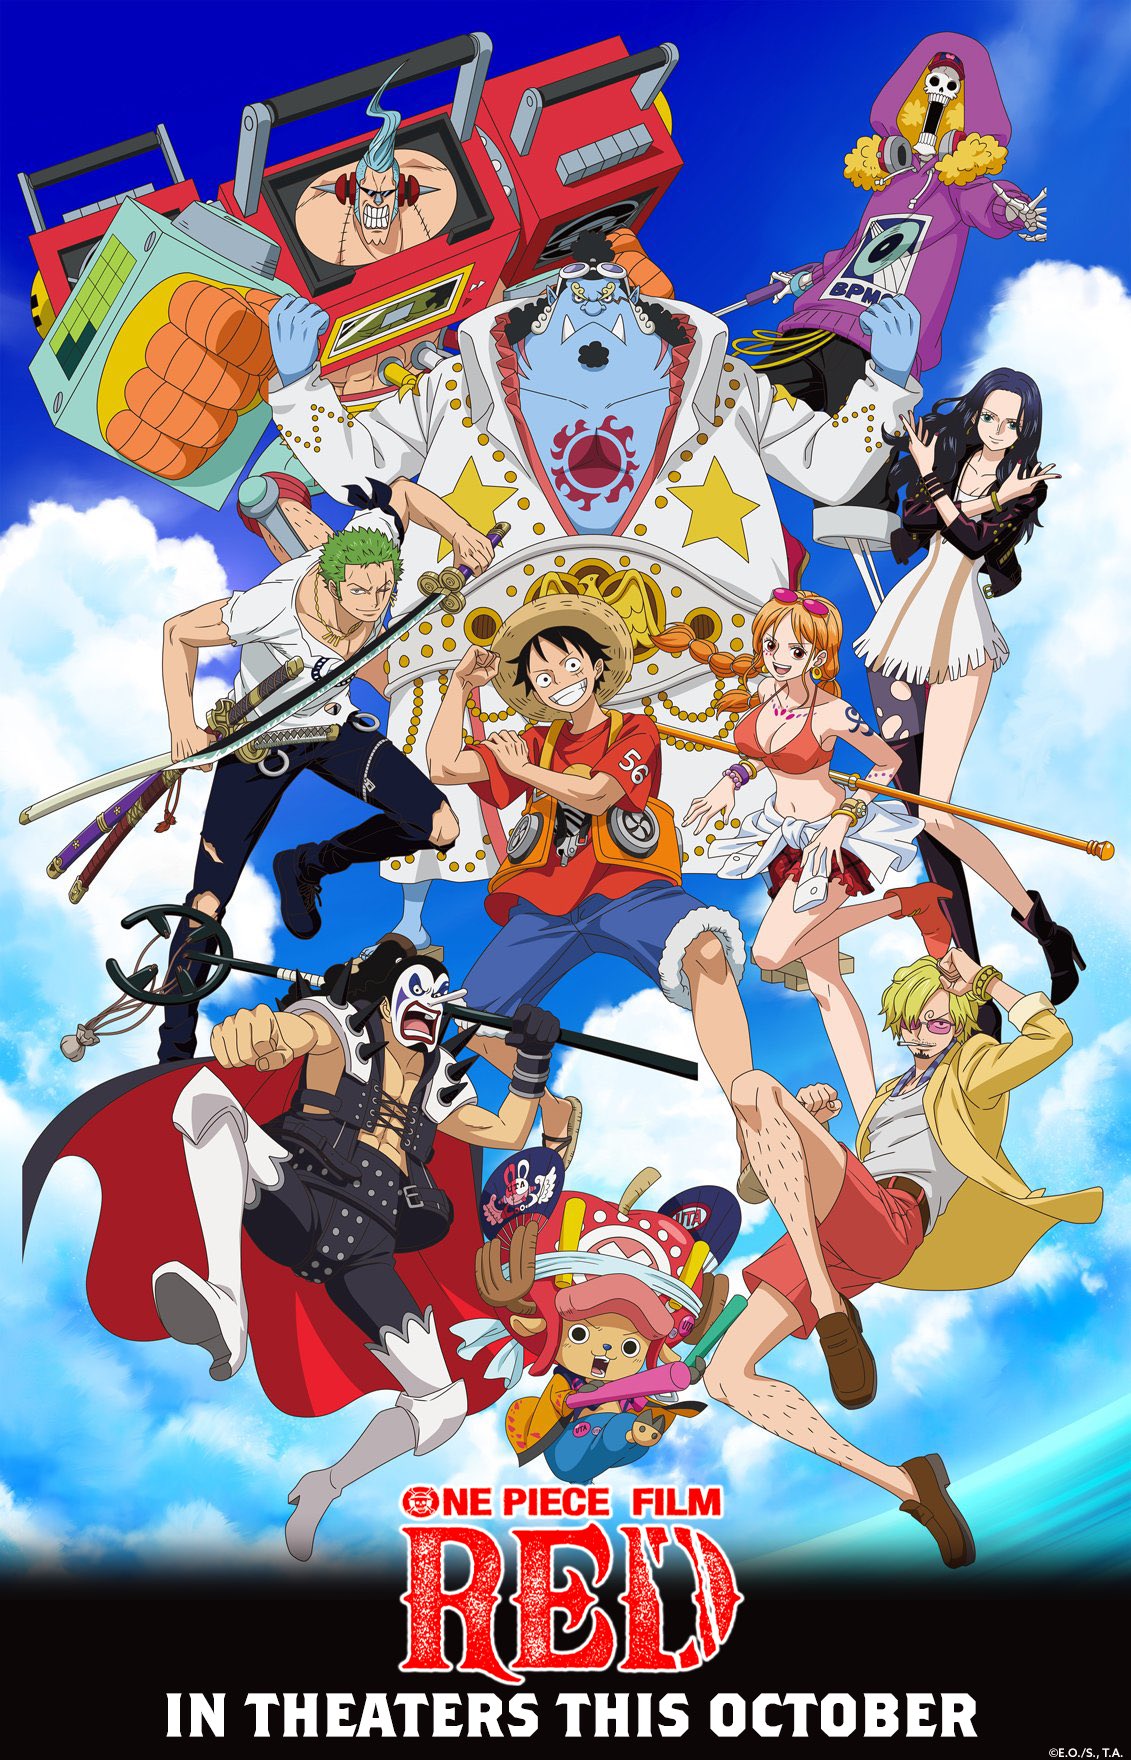 One Piece Film Z by SasukeUzumaki666 on DeviantArt